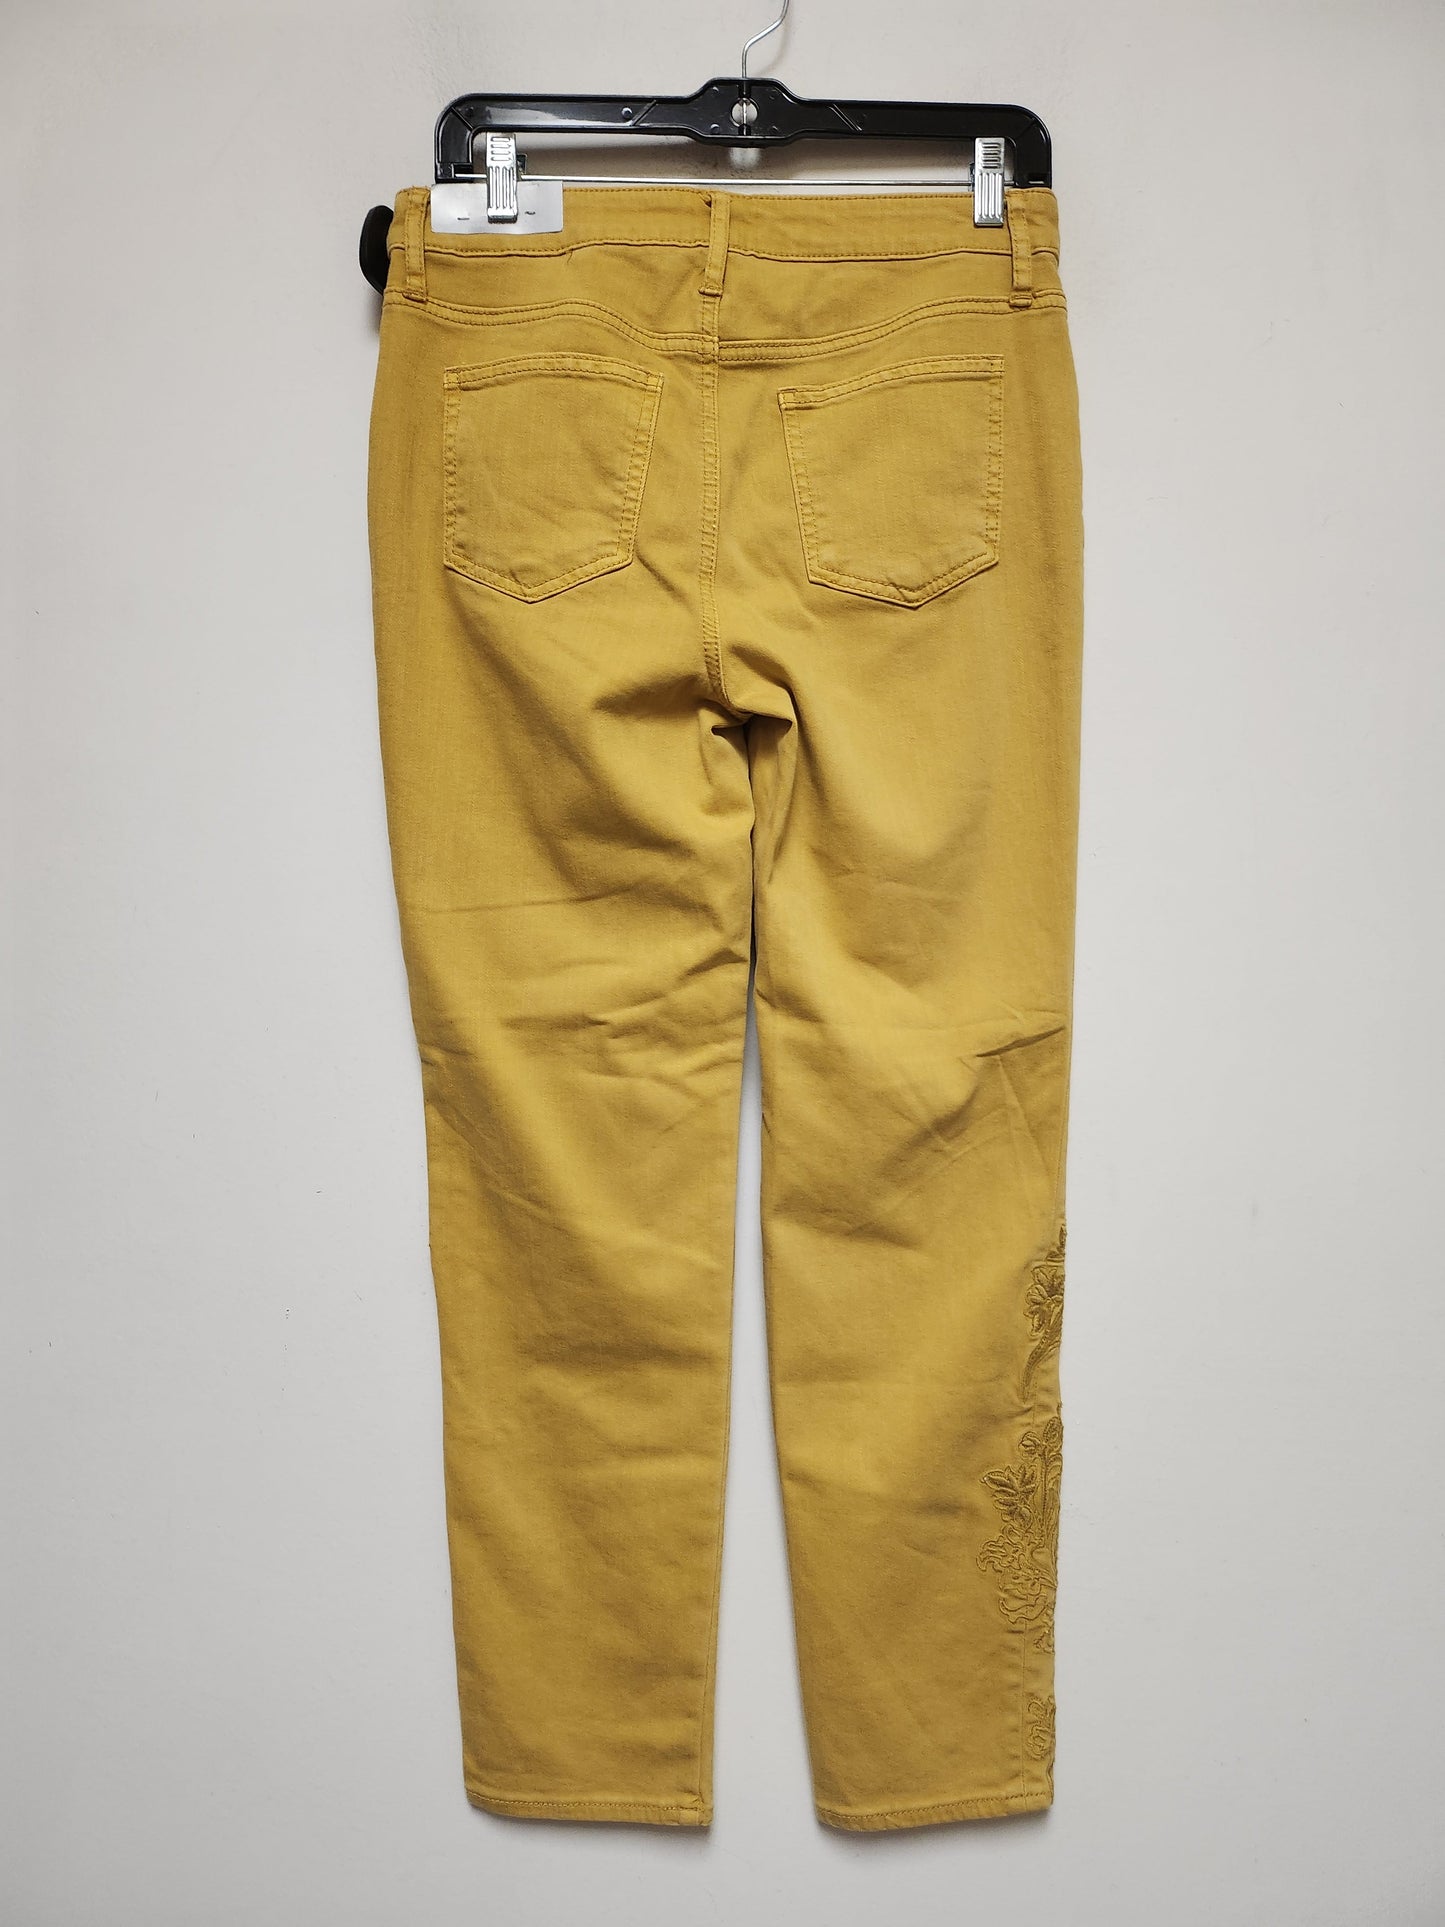 Yellow Denim Jeans Straight Chicos, Size 4